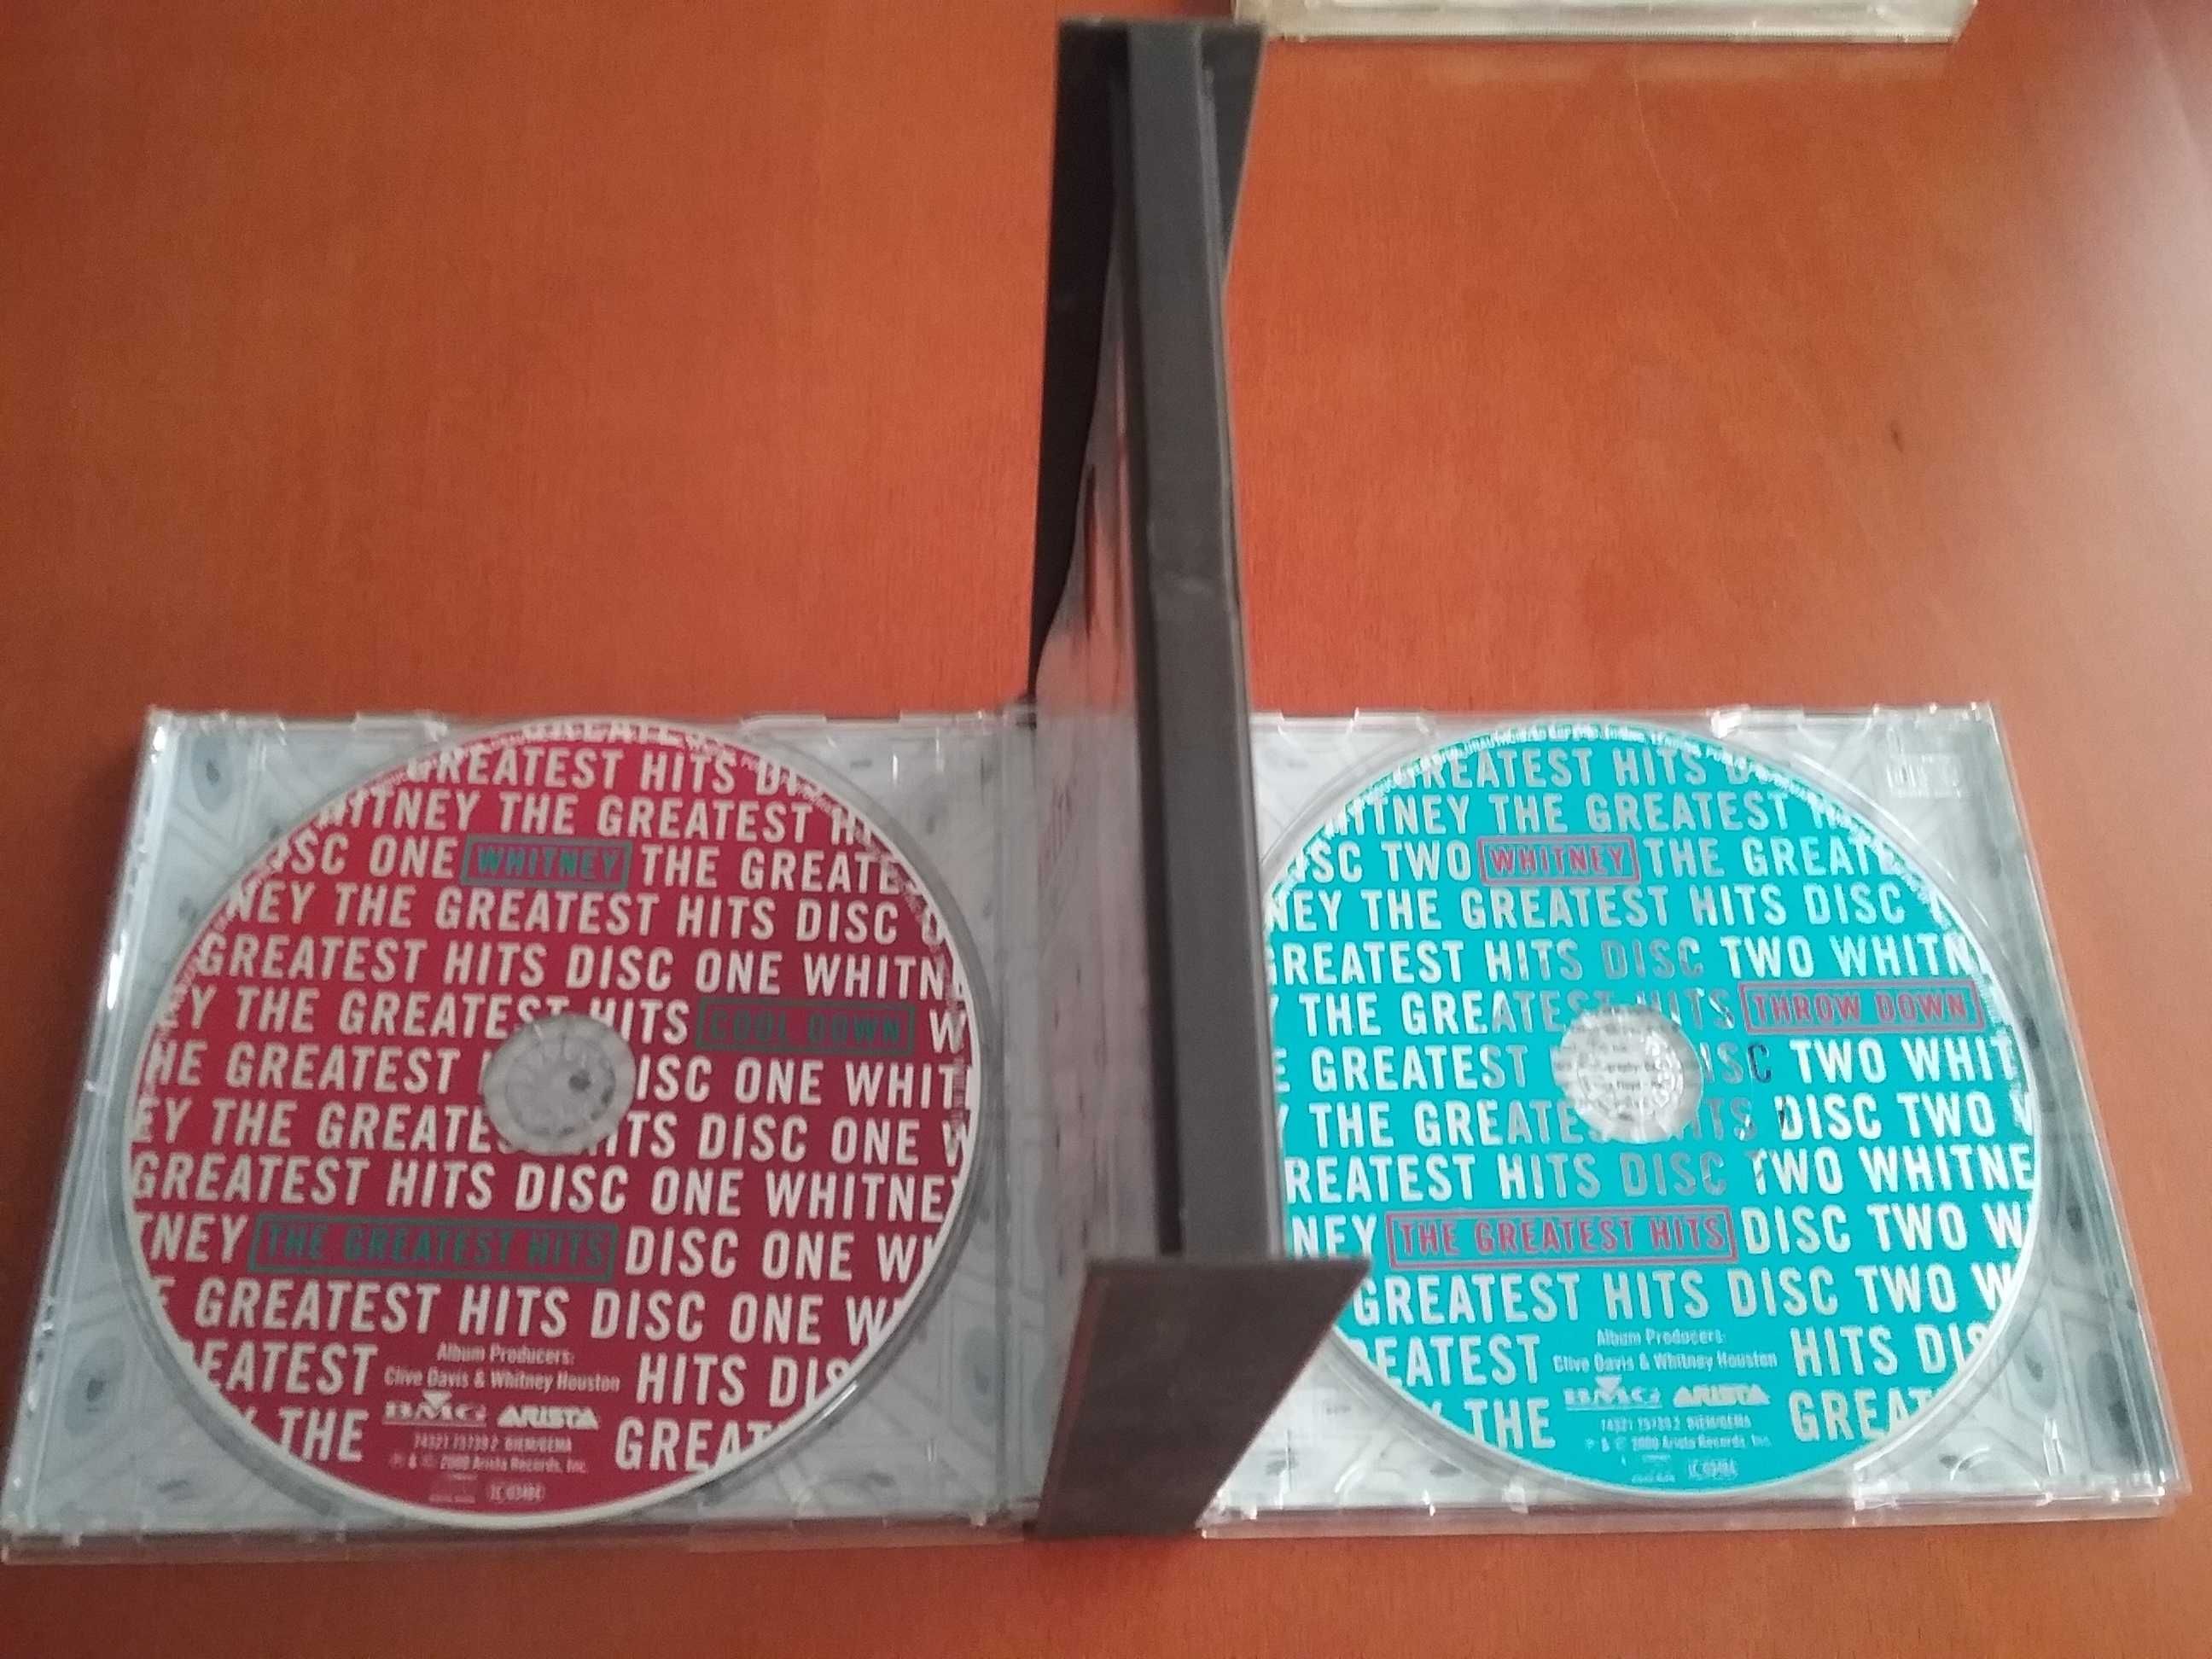 Whitney The Greatest Hits CD Duplo música